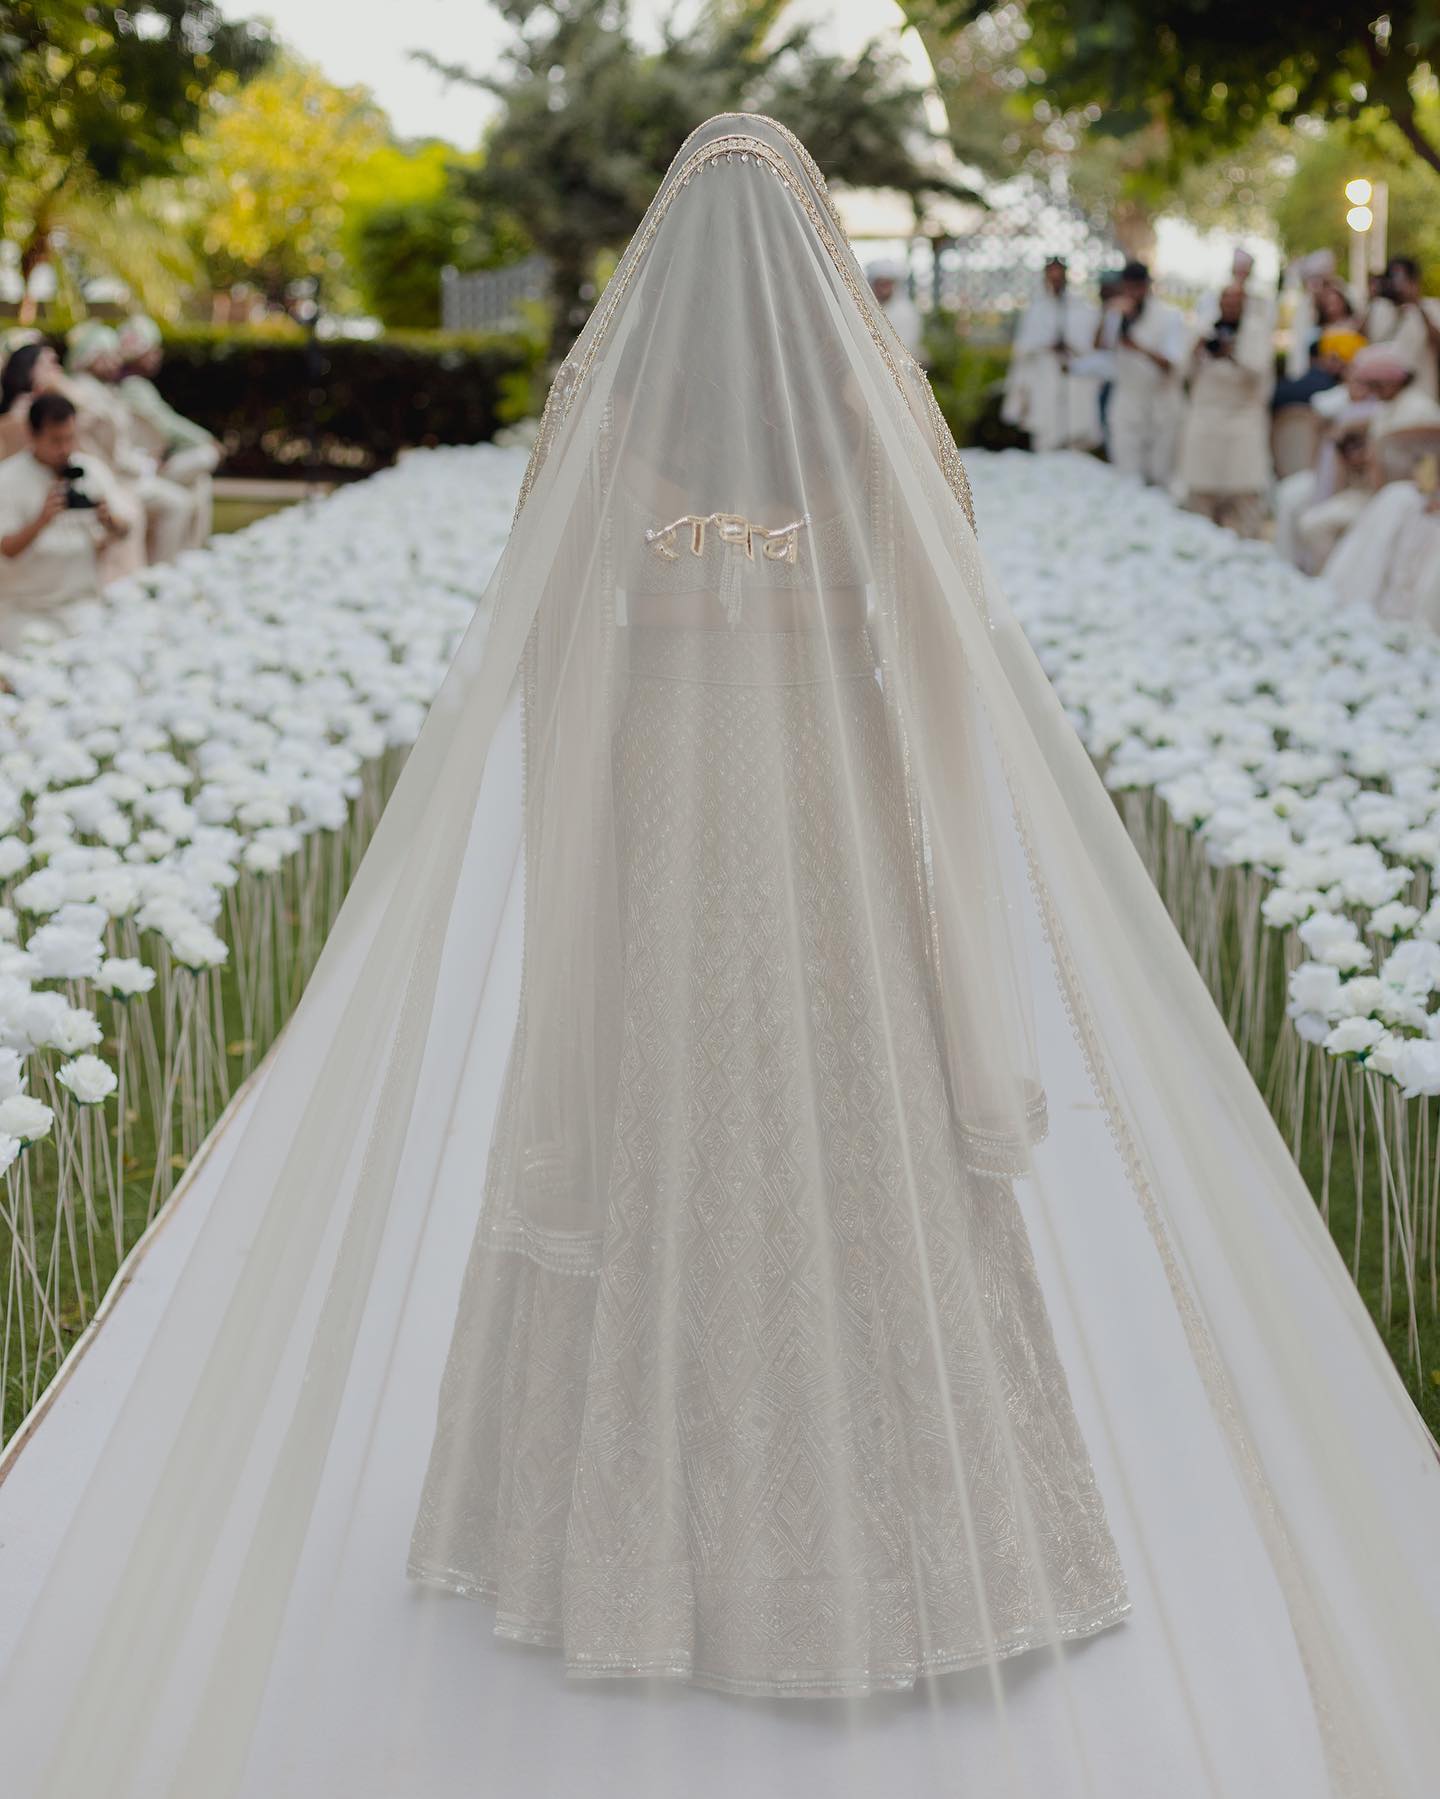 Parineeti Chopra's customised wedding veil